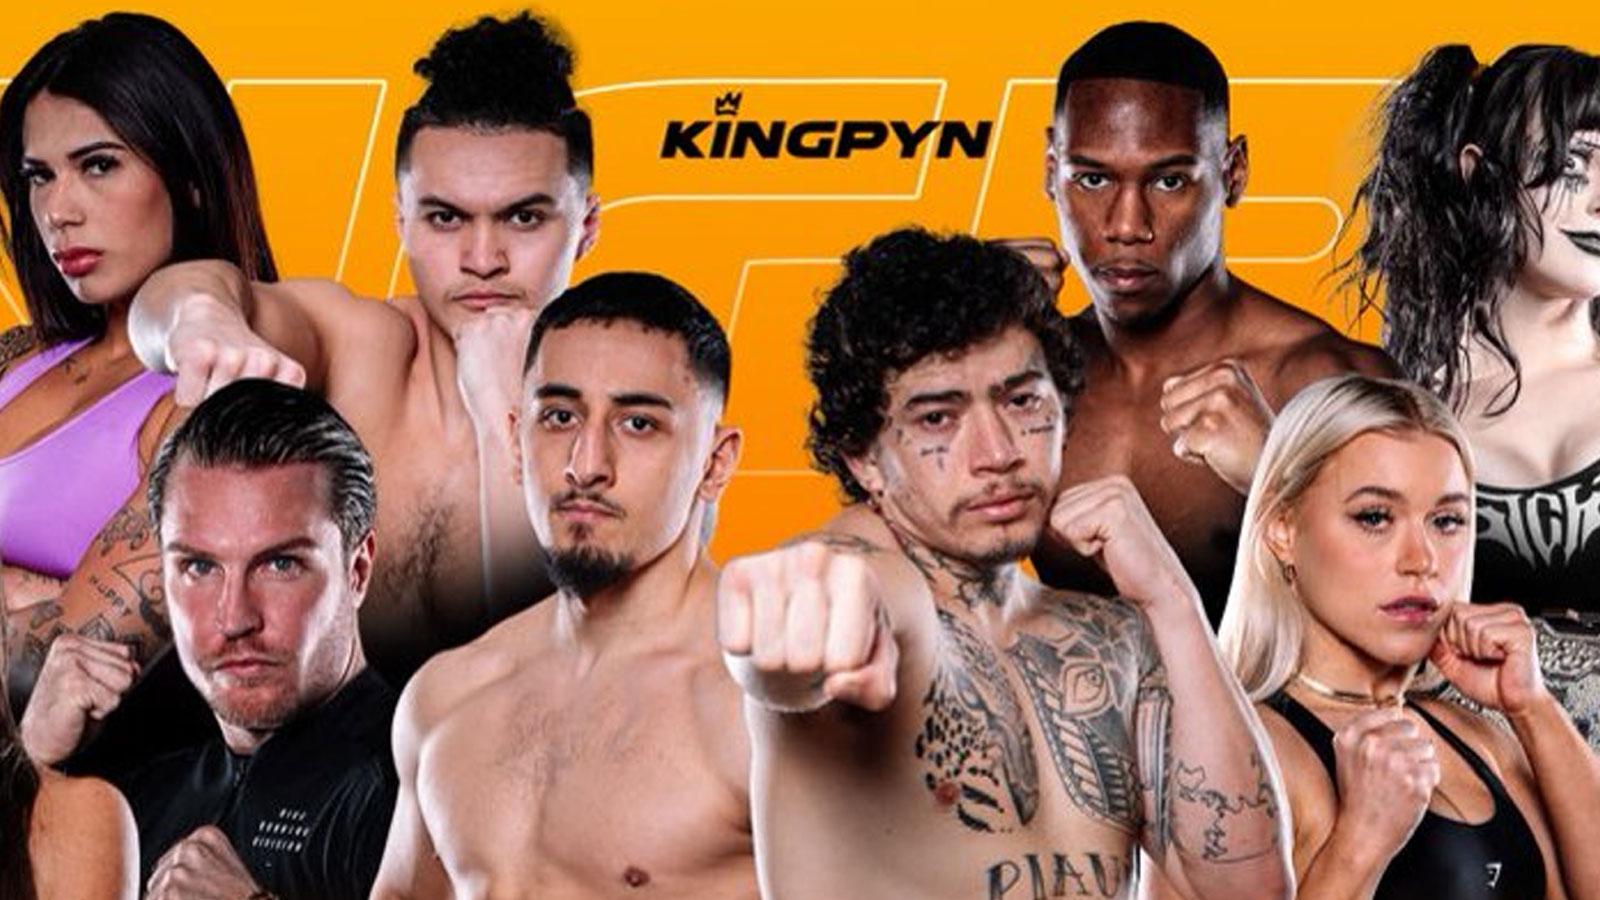 Kingpyn boxing tournament promotional image